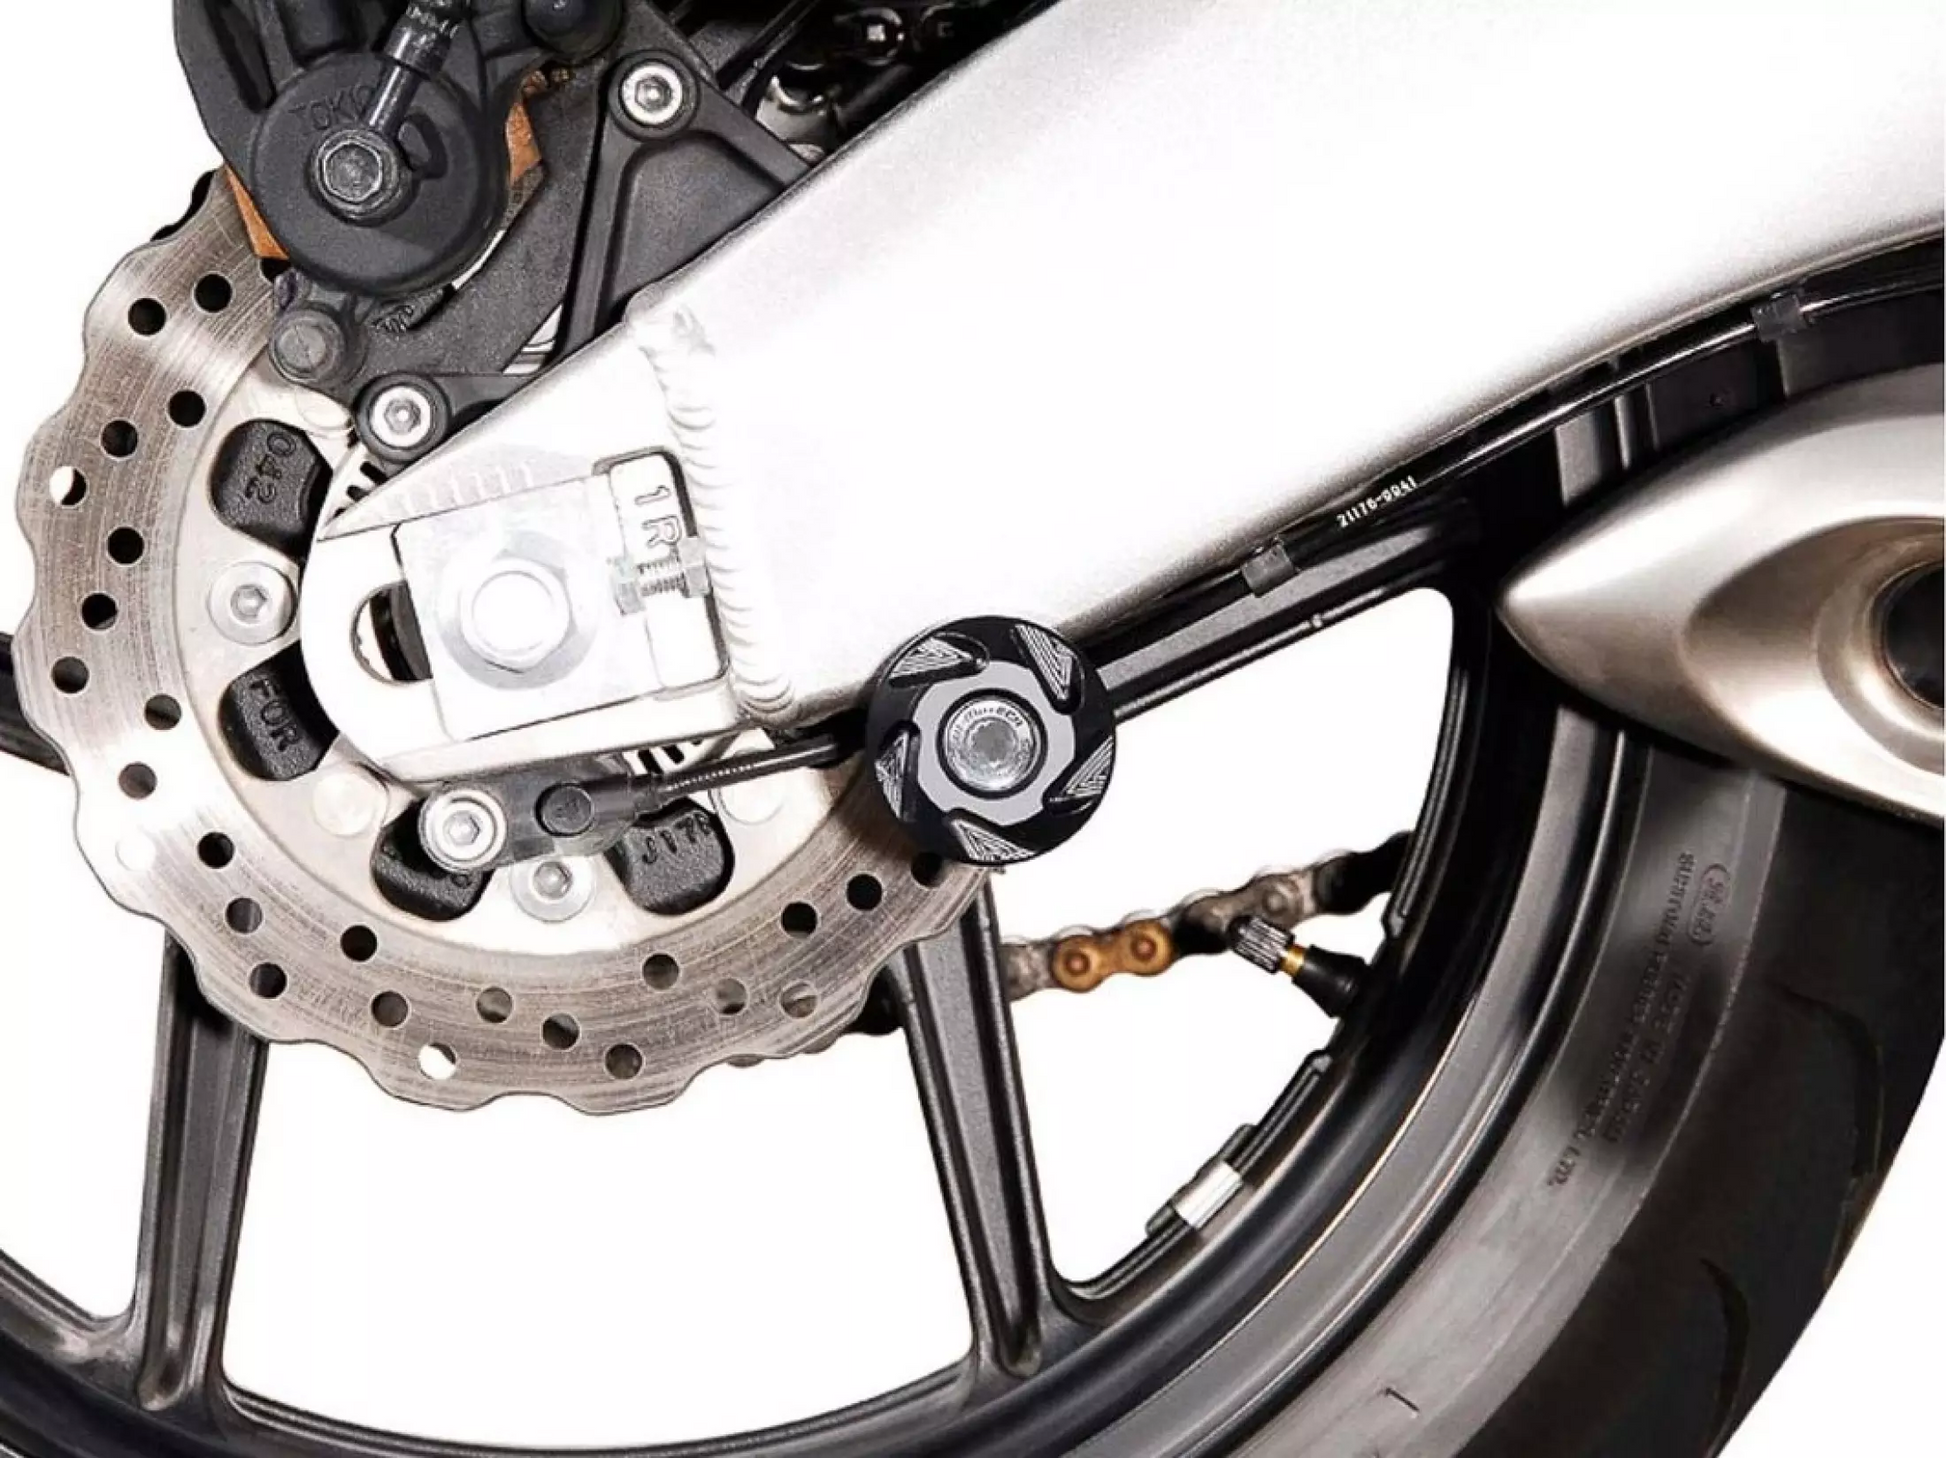 SW Motech Slider Set (Rear Axle Black) fits for Kawasaki Versys 650 ('10-'14) - Durian Bikers